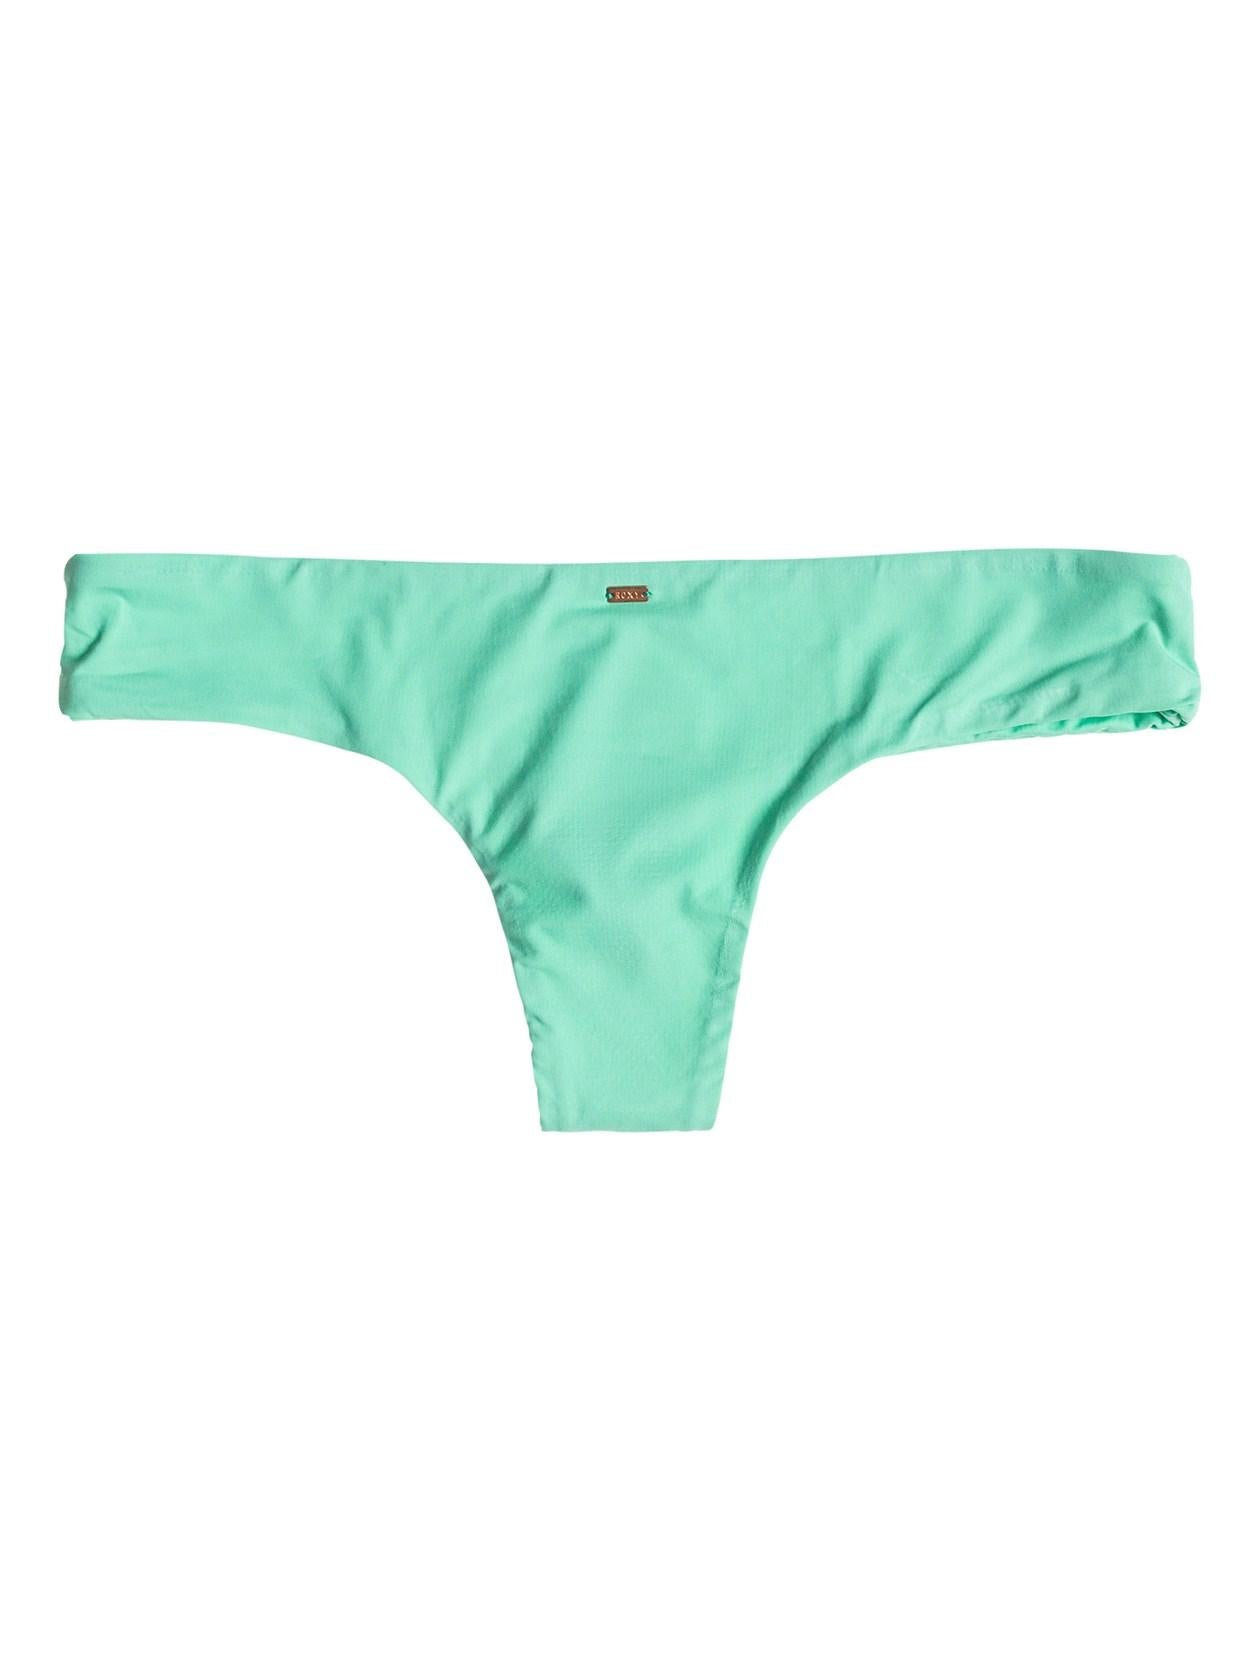 Roxy Cheeky Mini Sea Green Cheeky Bikini Bottom